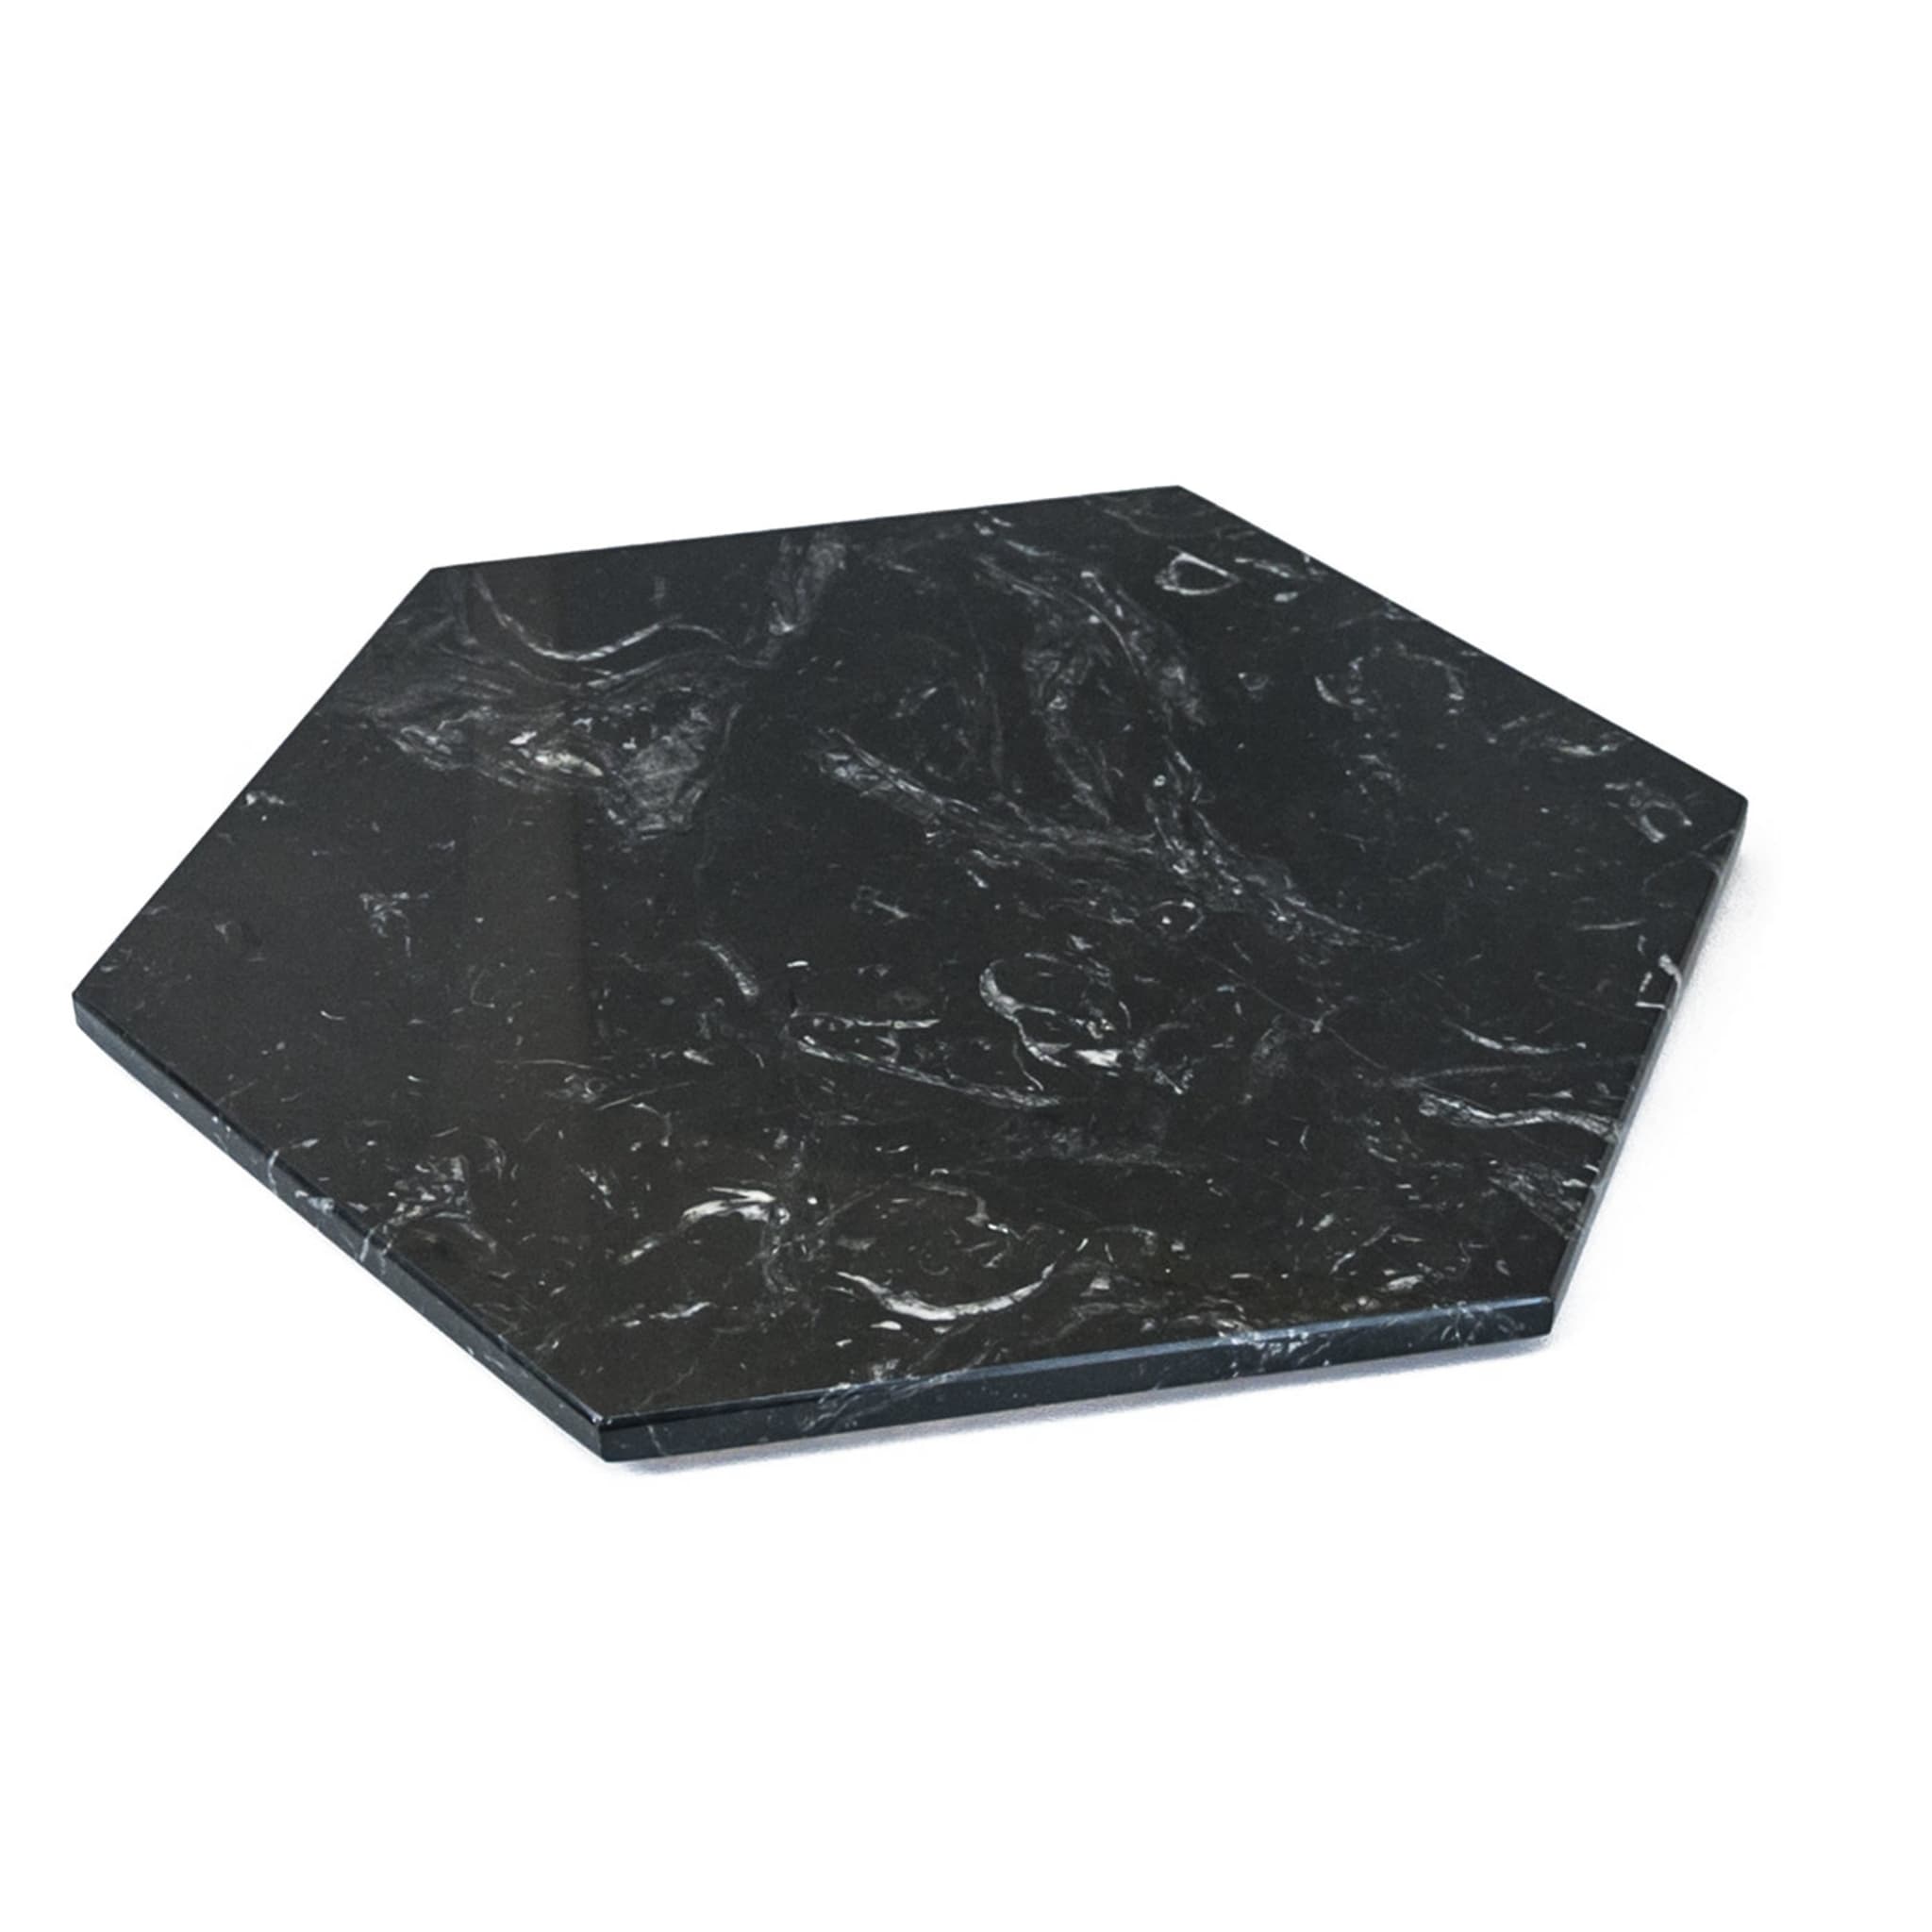 Hexagonal Black Marble Plate - Alternative view 1